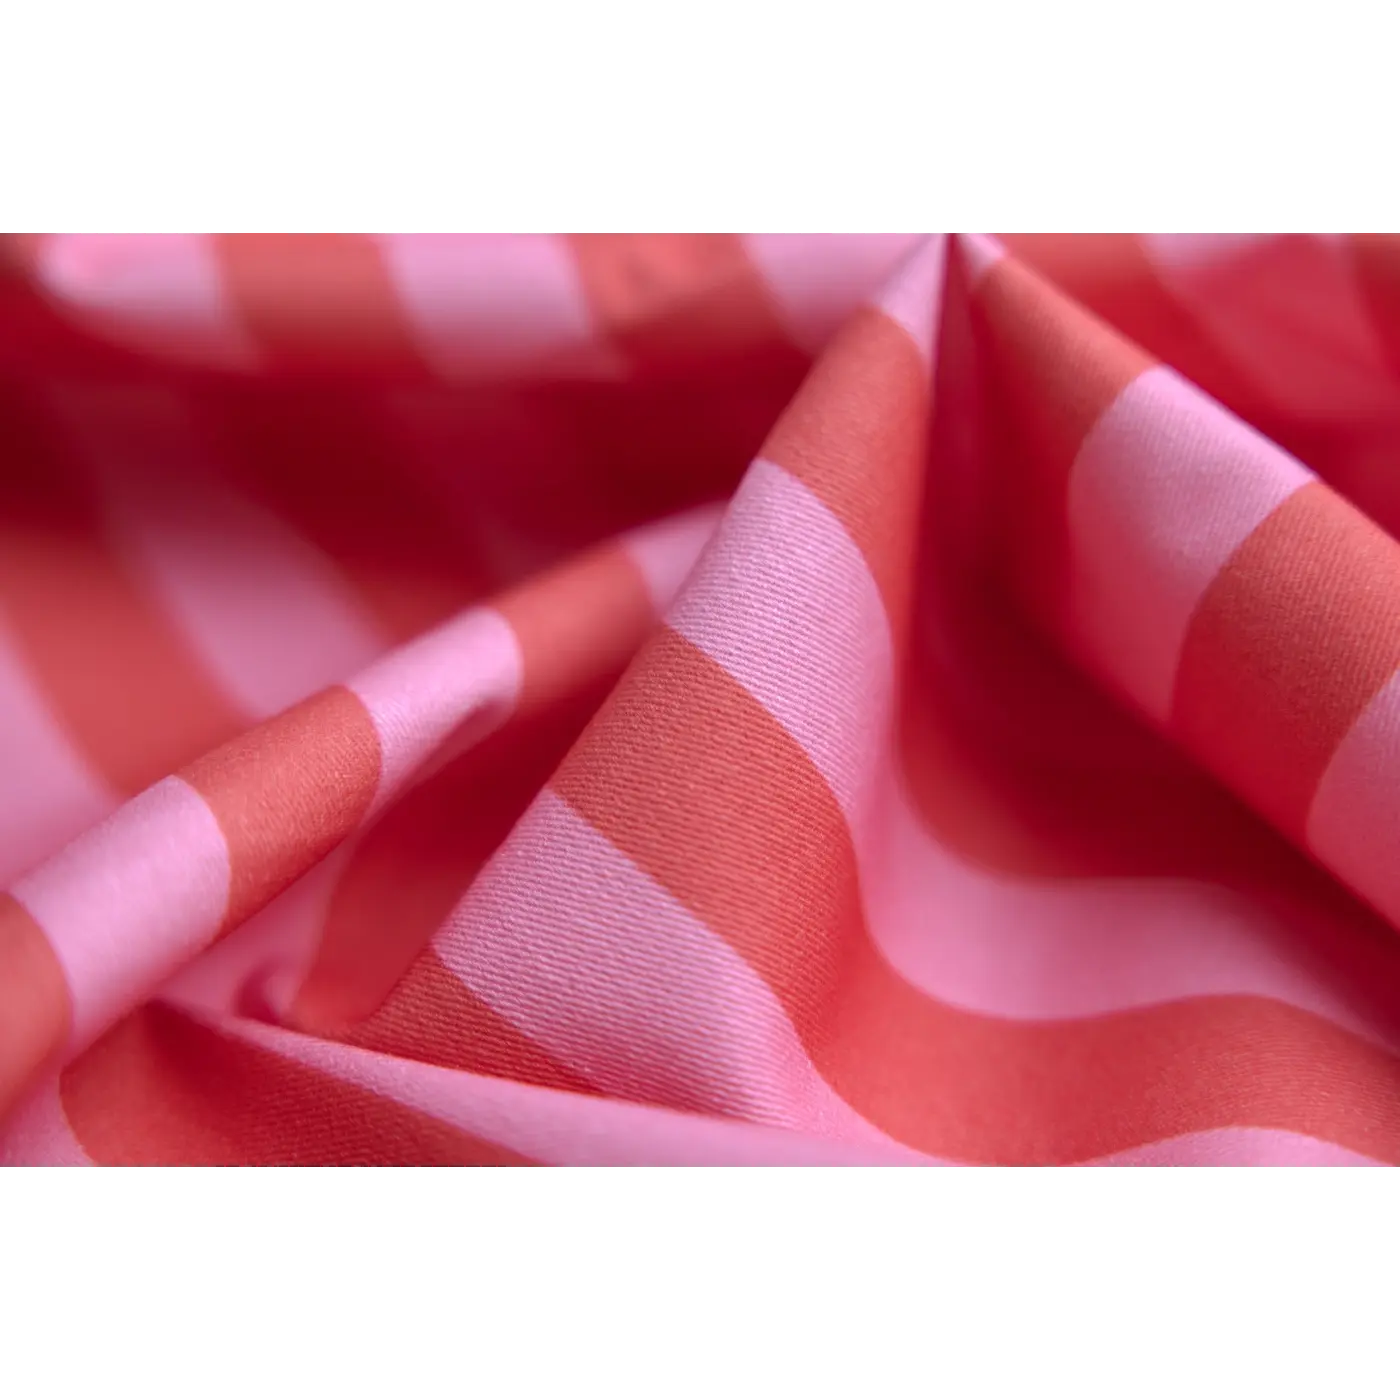 Lempi Red-pink Stripe Keittiöpyyhe - Pyyheliina